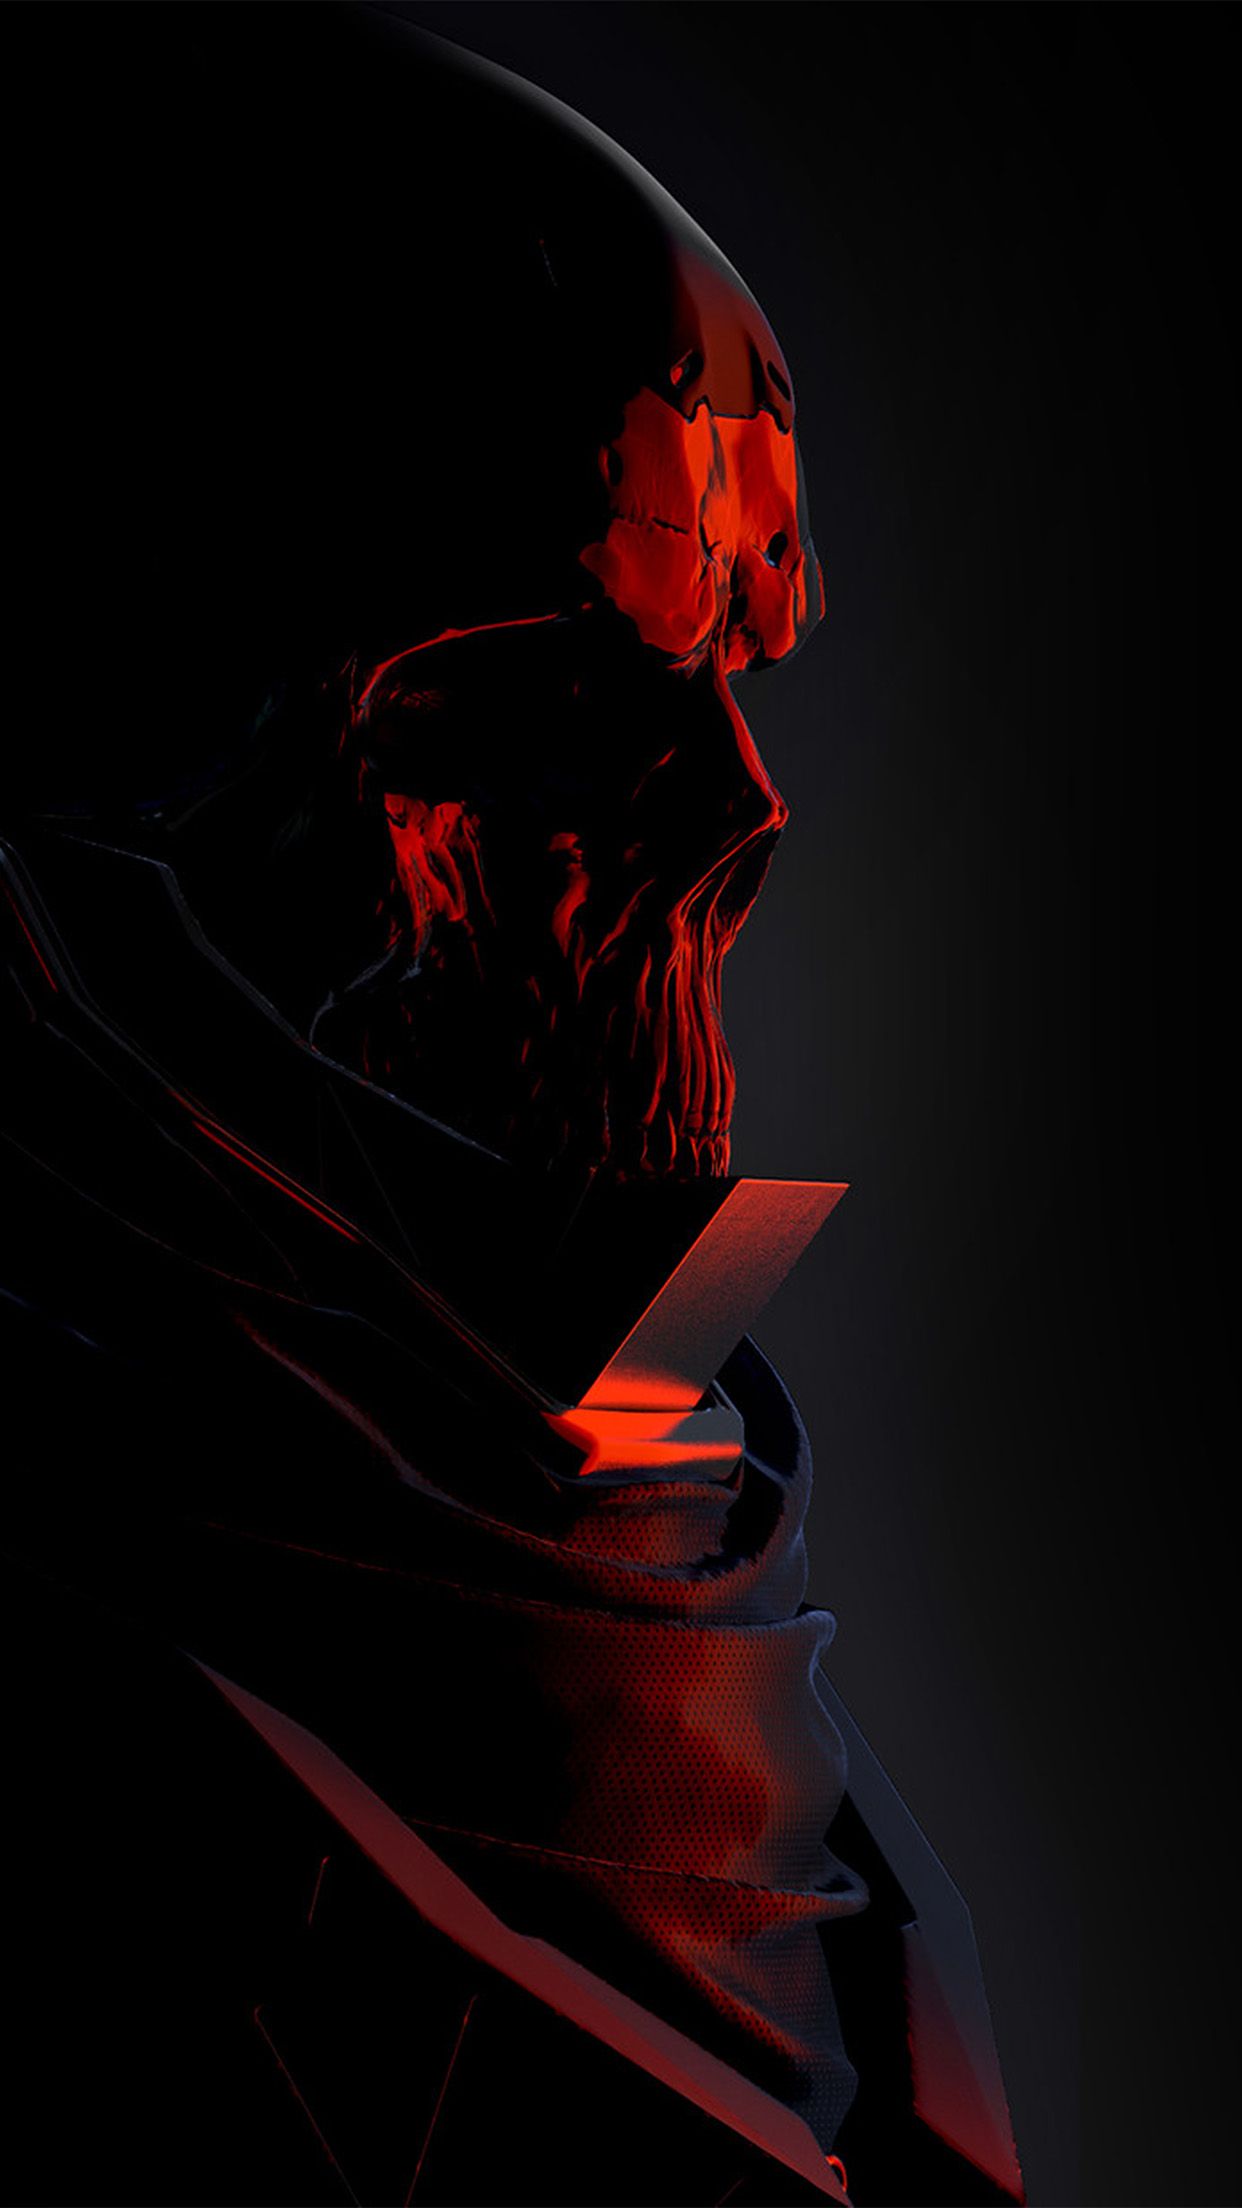 iPhone X wallpaper. mario stabile weird red dark illustration art skull